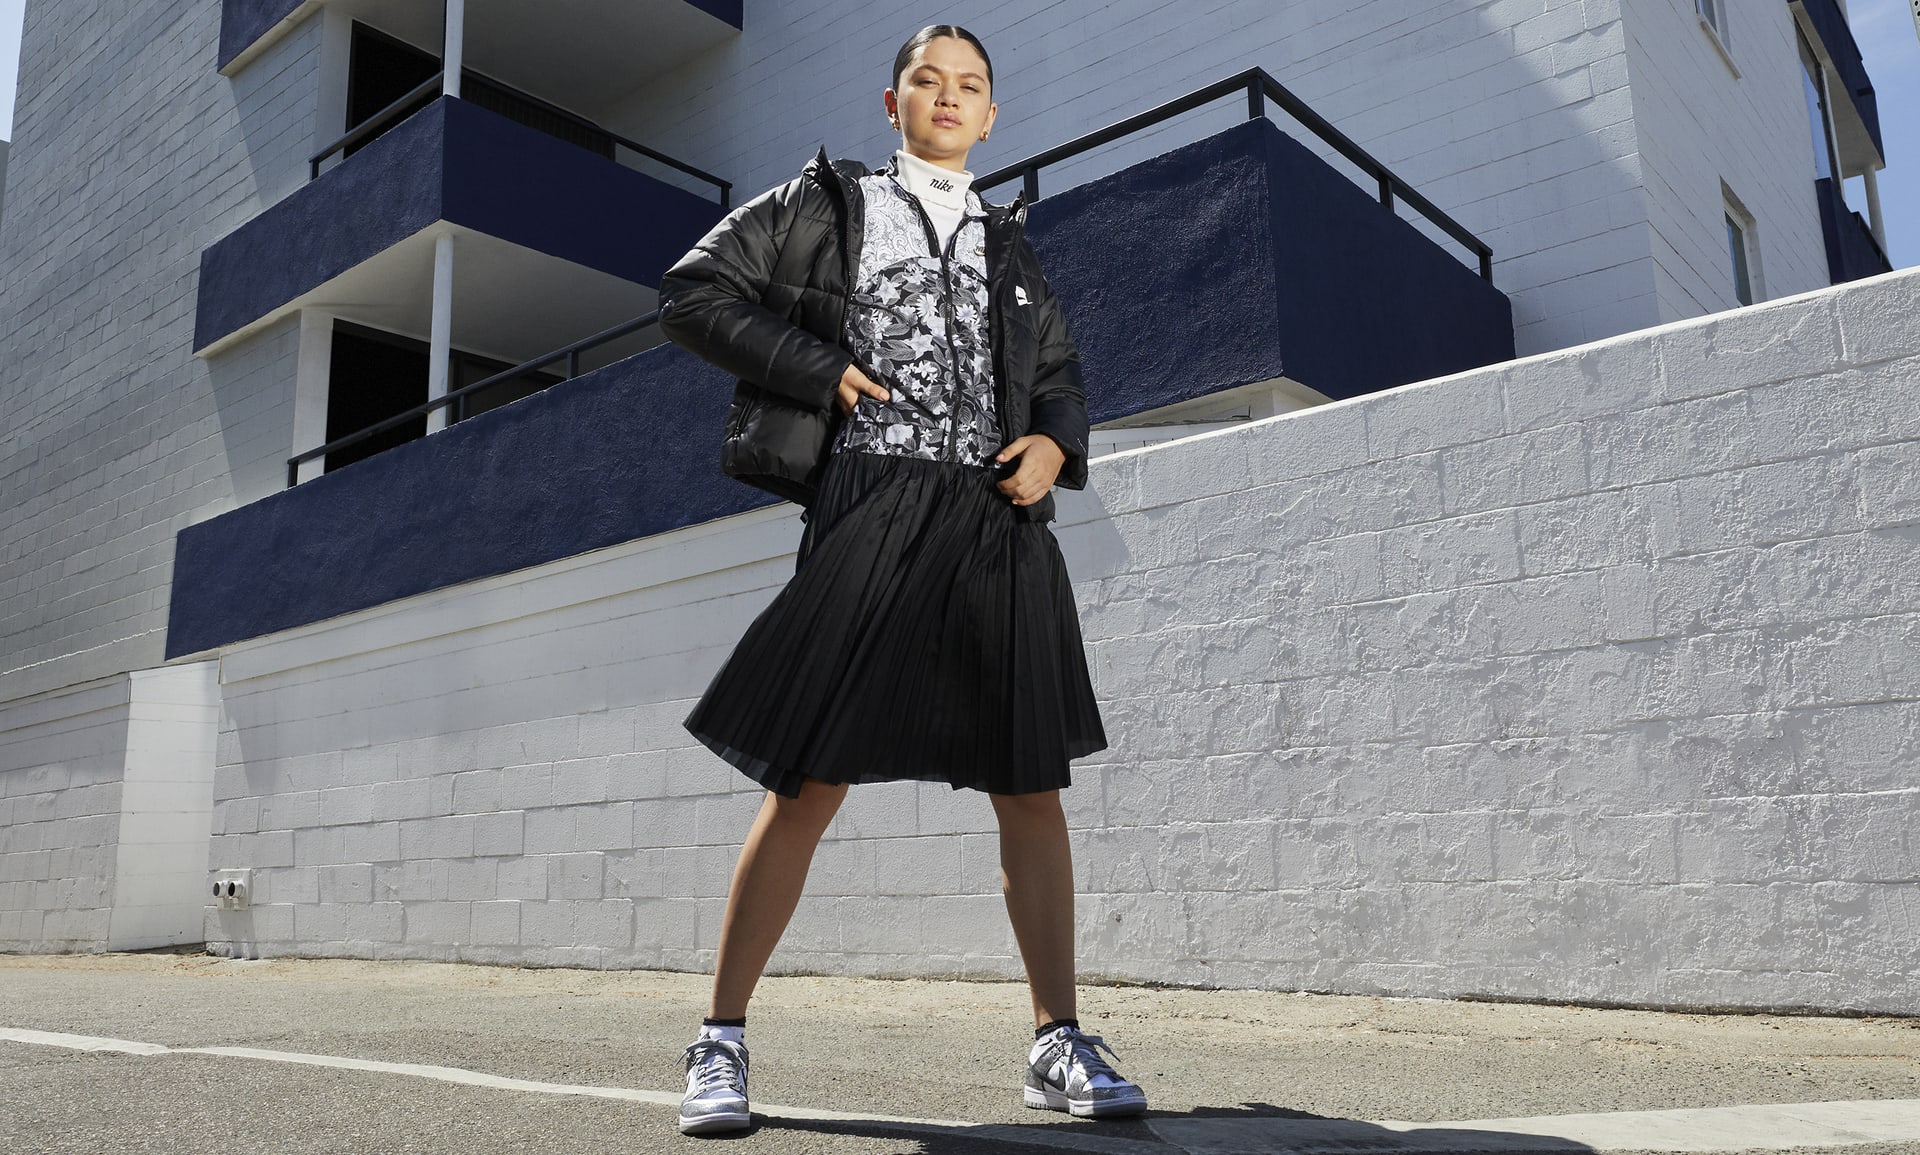 Nike Sportswear Therma-FIT Repel Women\'s Synthetic-Fill Hooded Jacket. Nike